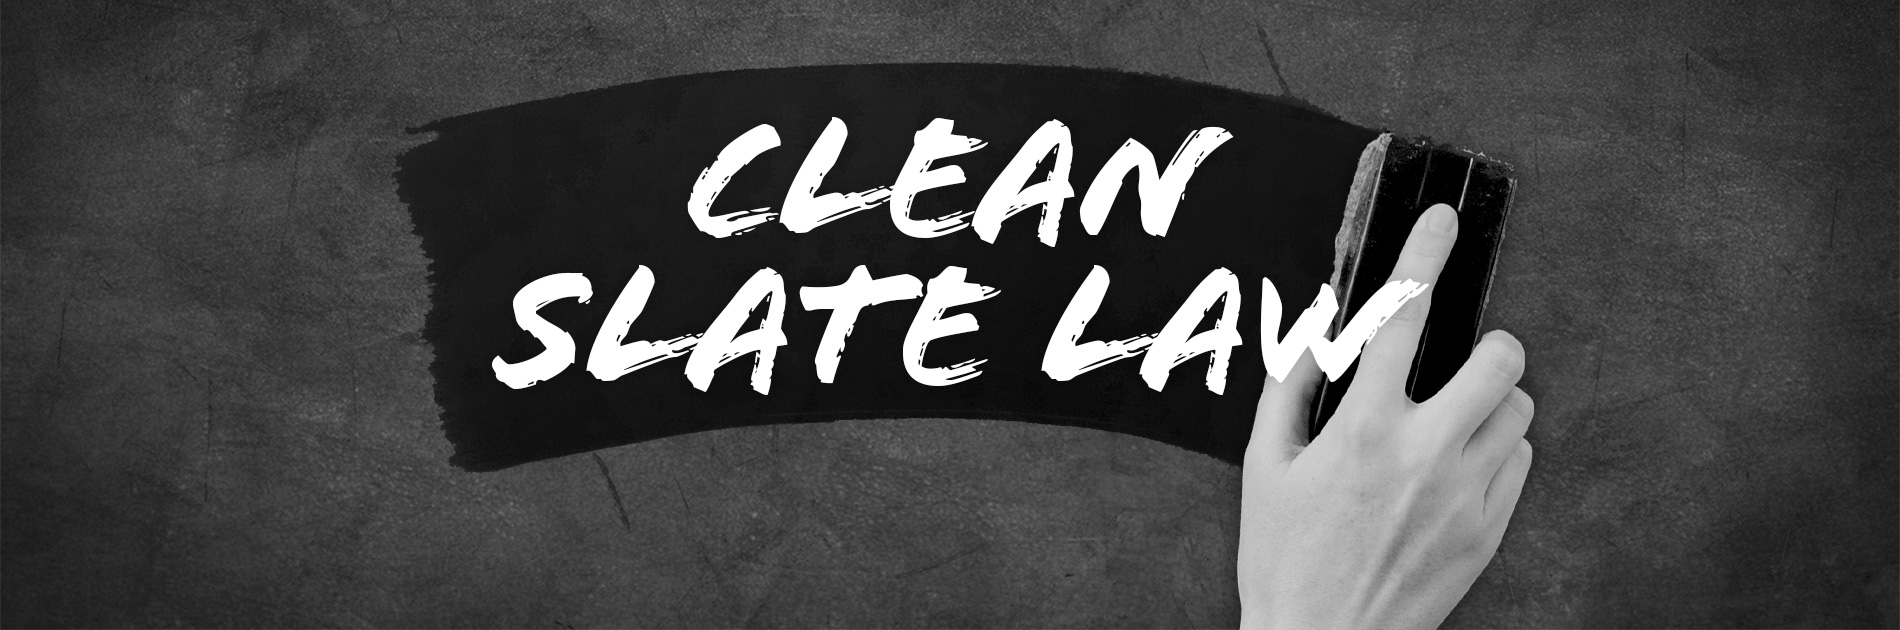 Clean Slate - Senator Sharif Street